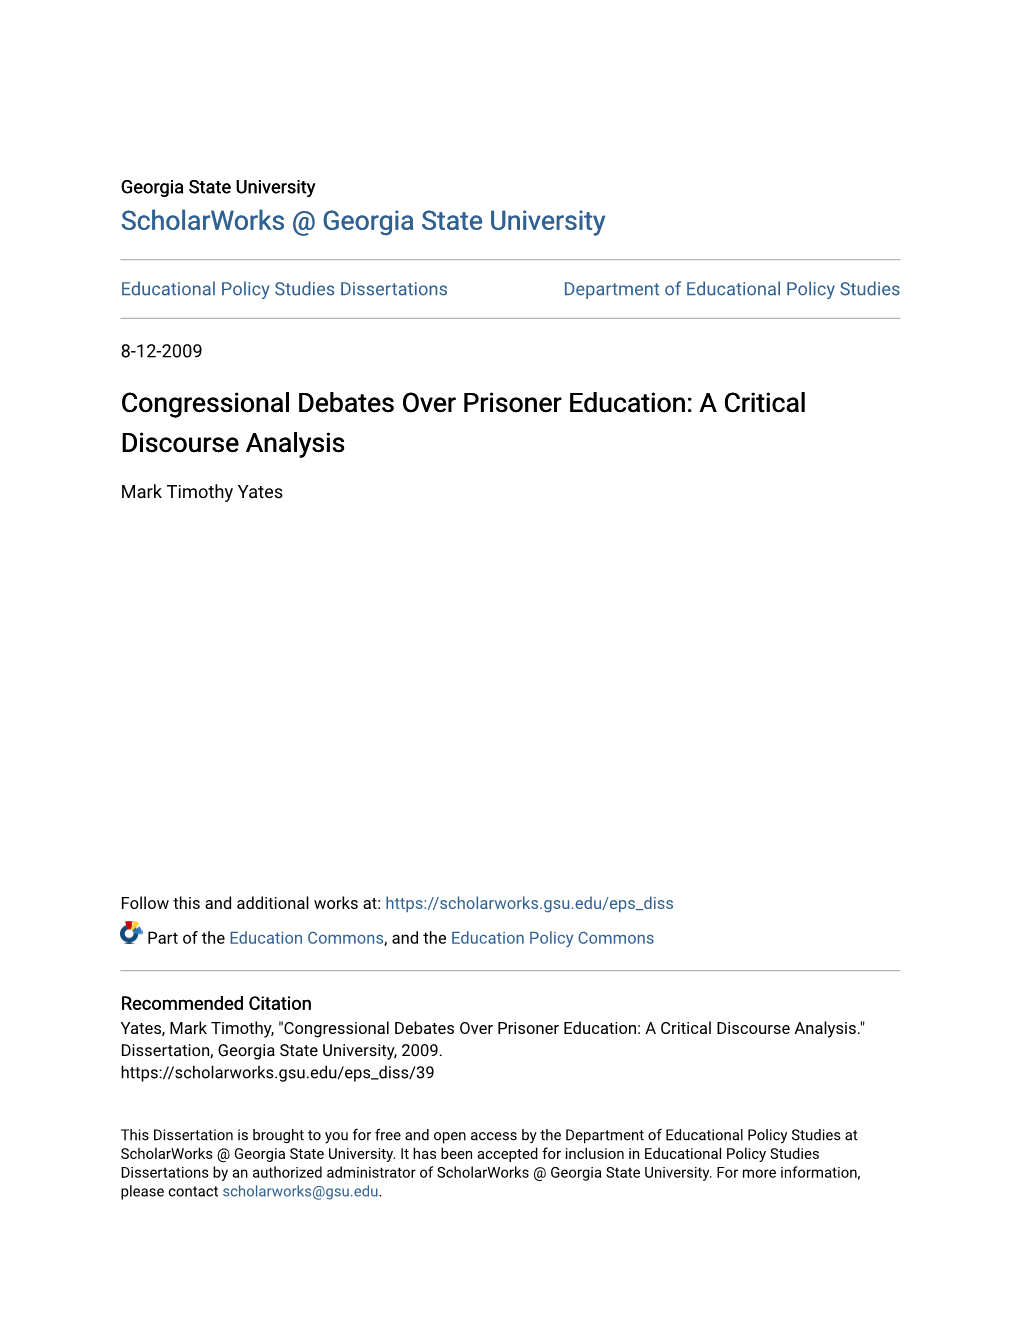 Congressional Debates Over Prisoner Education: a Critical Discourse Analysis